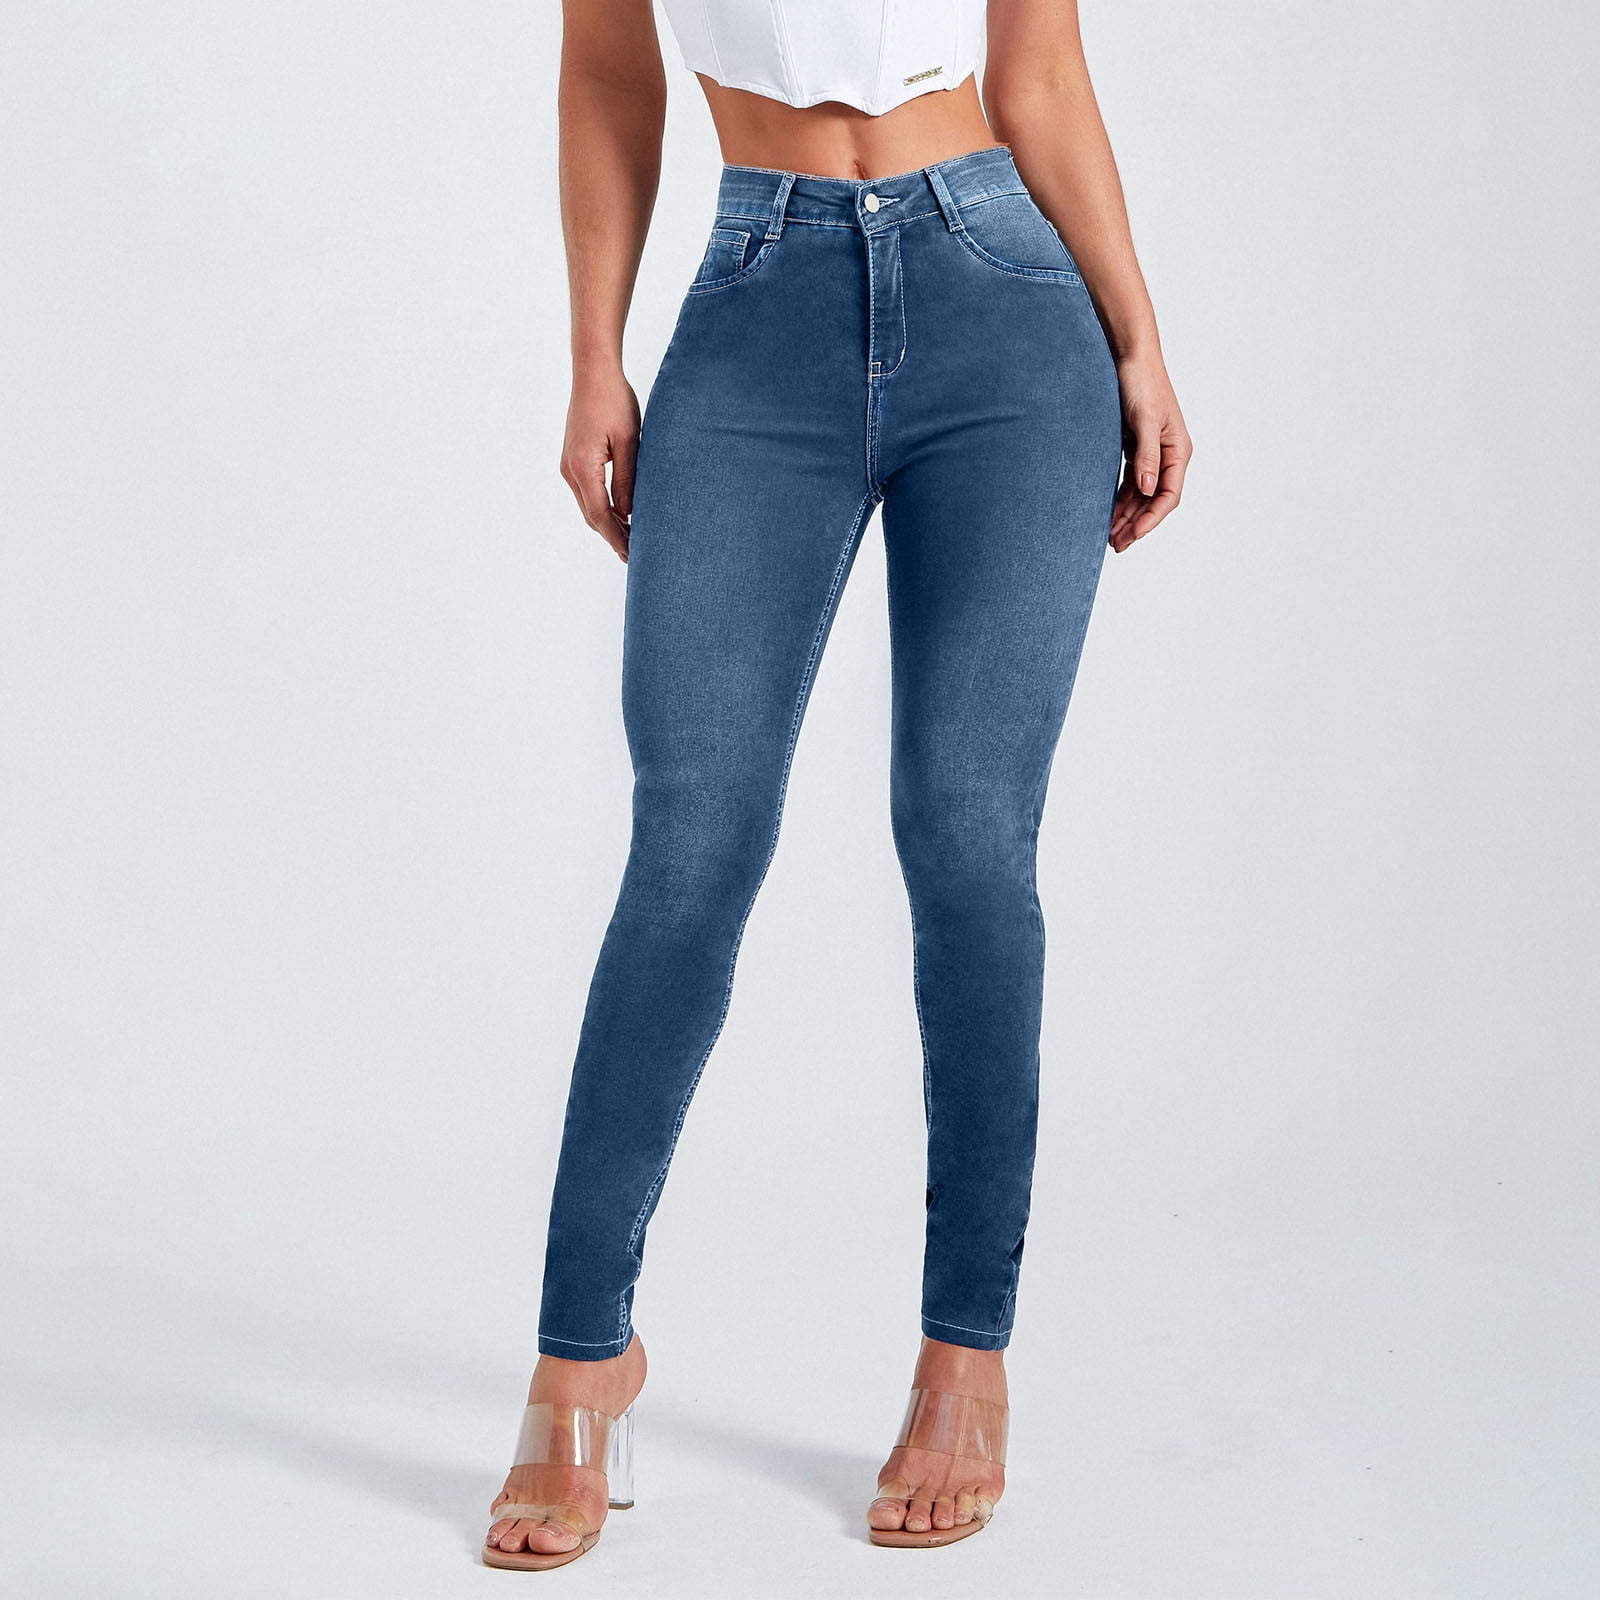 Aggregate more than 197 long zipper jeans best